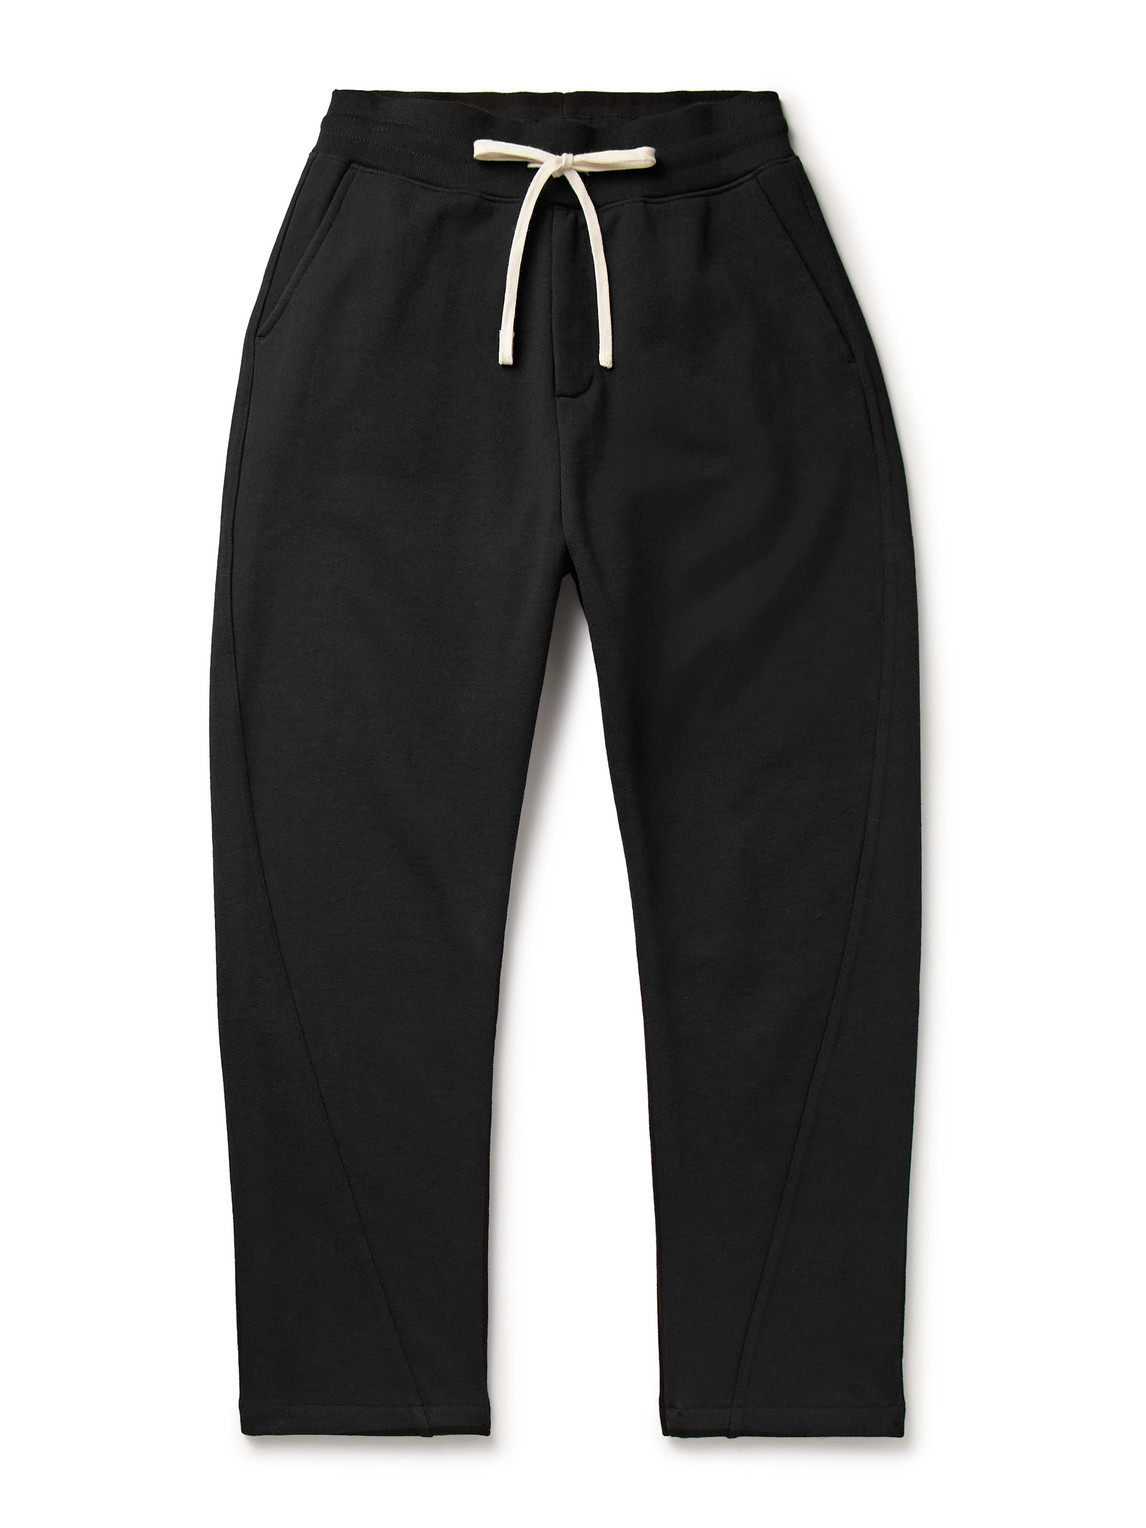 John Elliott - Studio Fleece Sendai Slim-Fit Cotton-Jersey Sweatpants - Men - Black - L von John Elliott